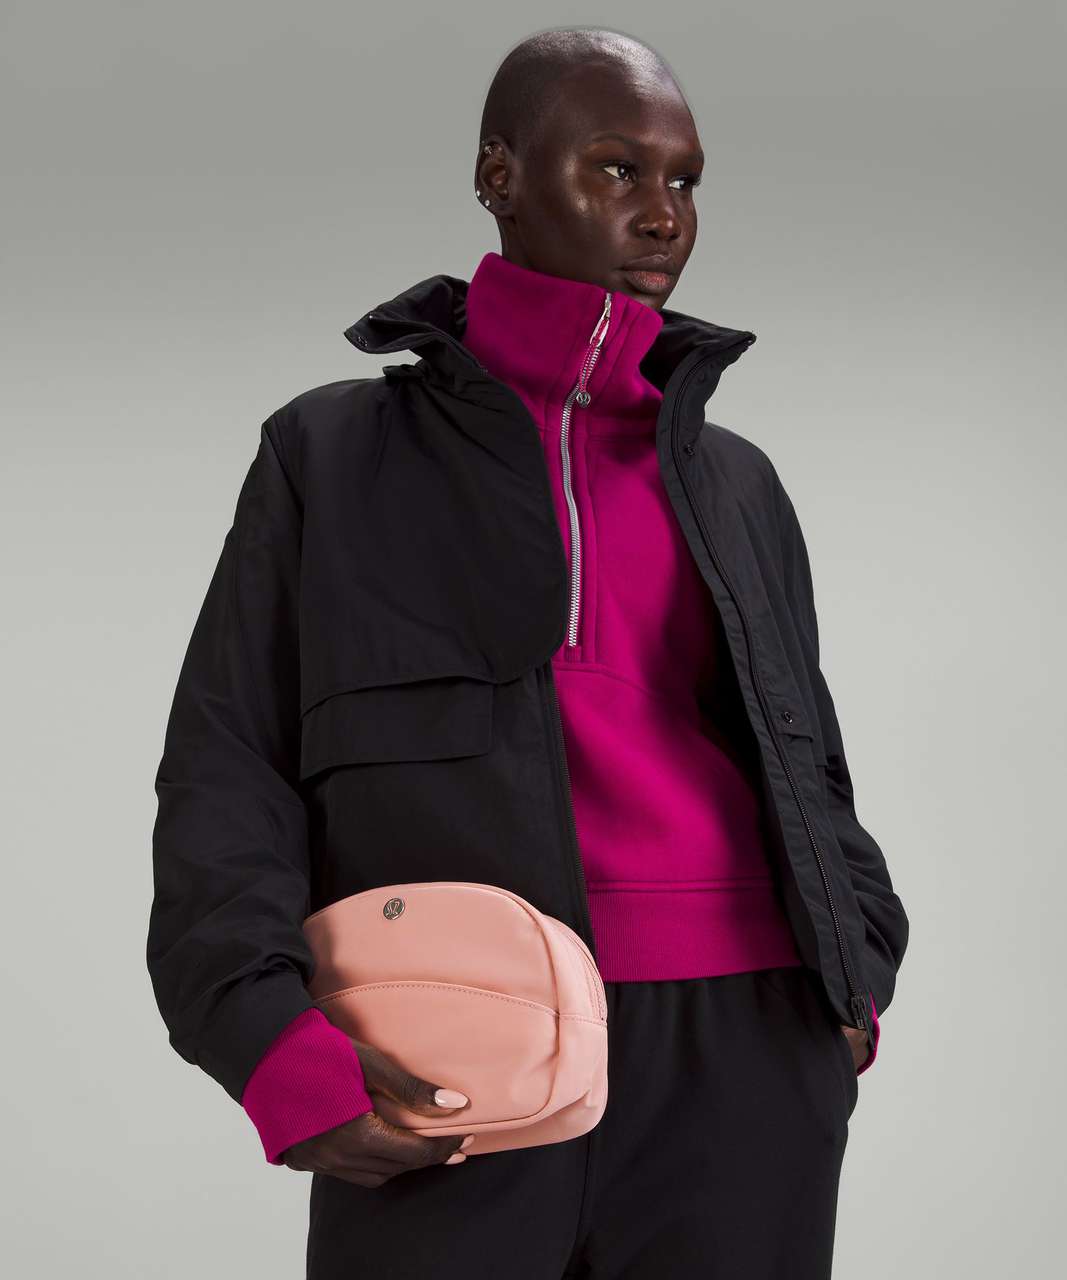 Bag Bib® Grand Go Getter in Rose Pink